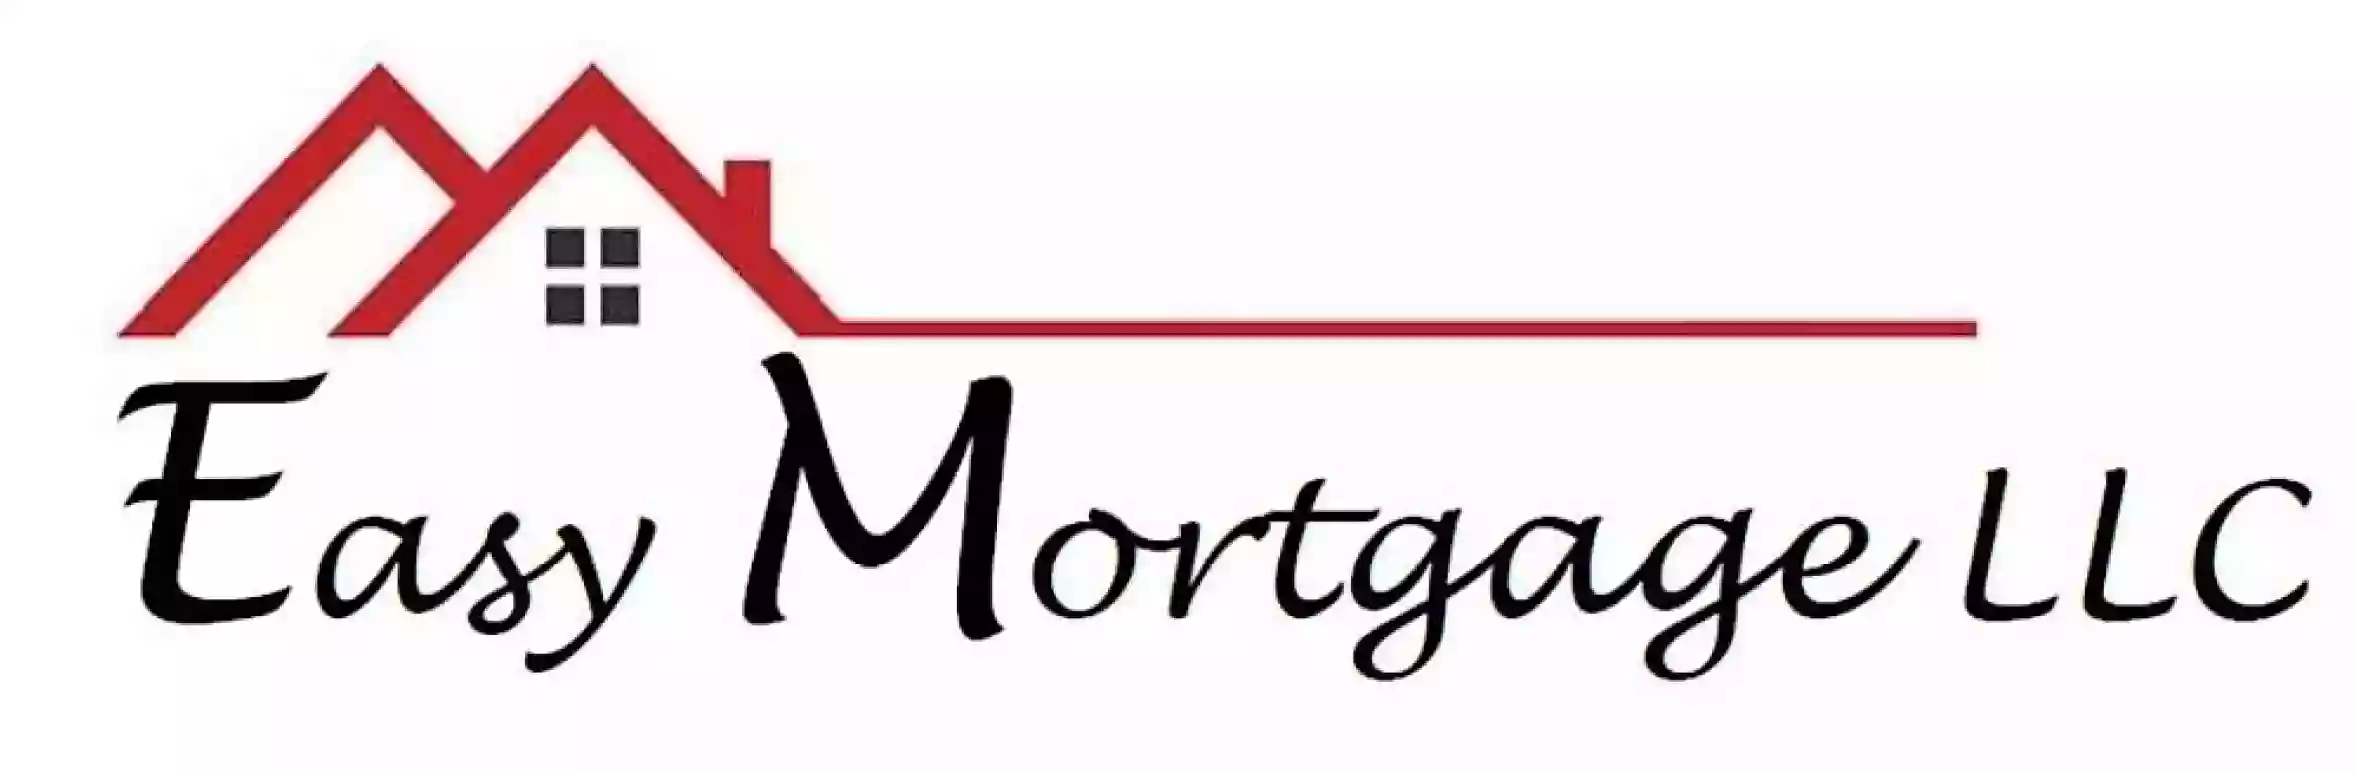 Easy Mortgage LLC